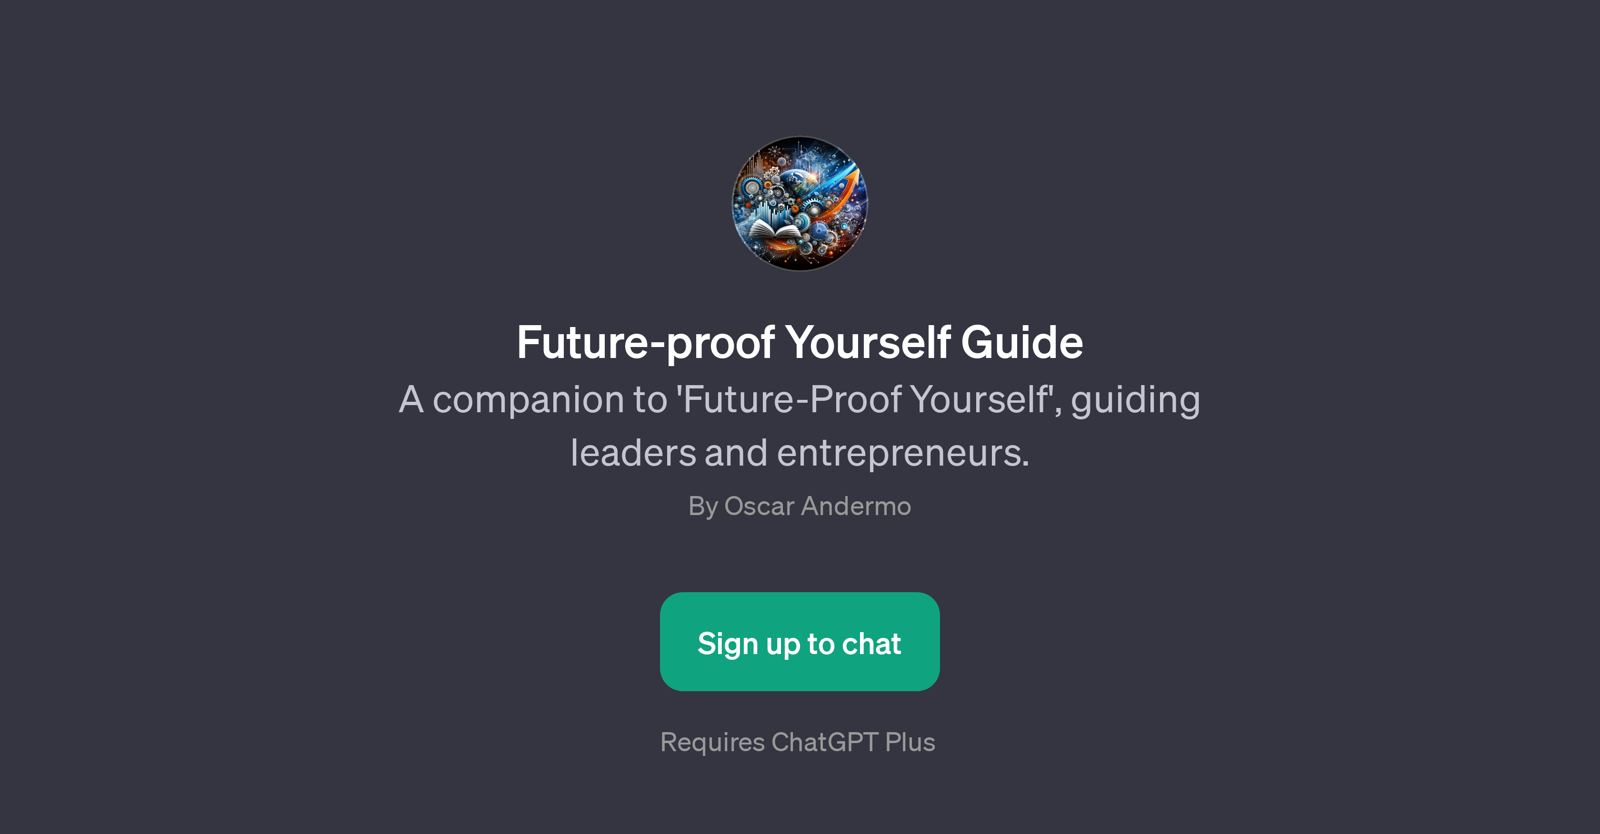 Future-proof Yourself Guide website